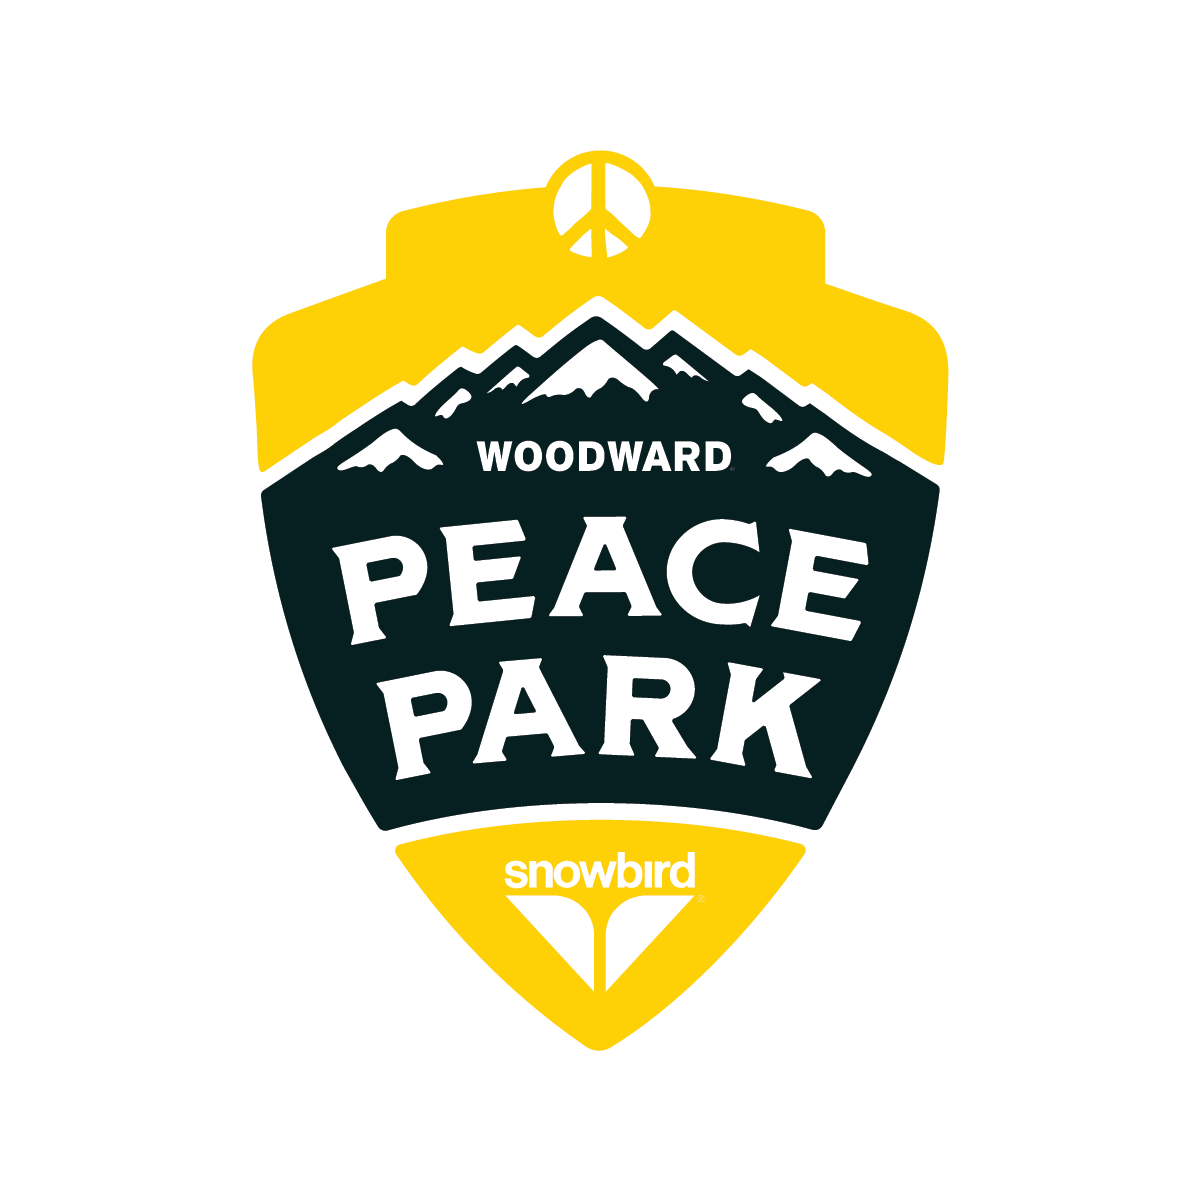 Woodward Mountain Park & Peace Park at Snowbird